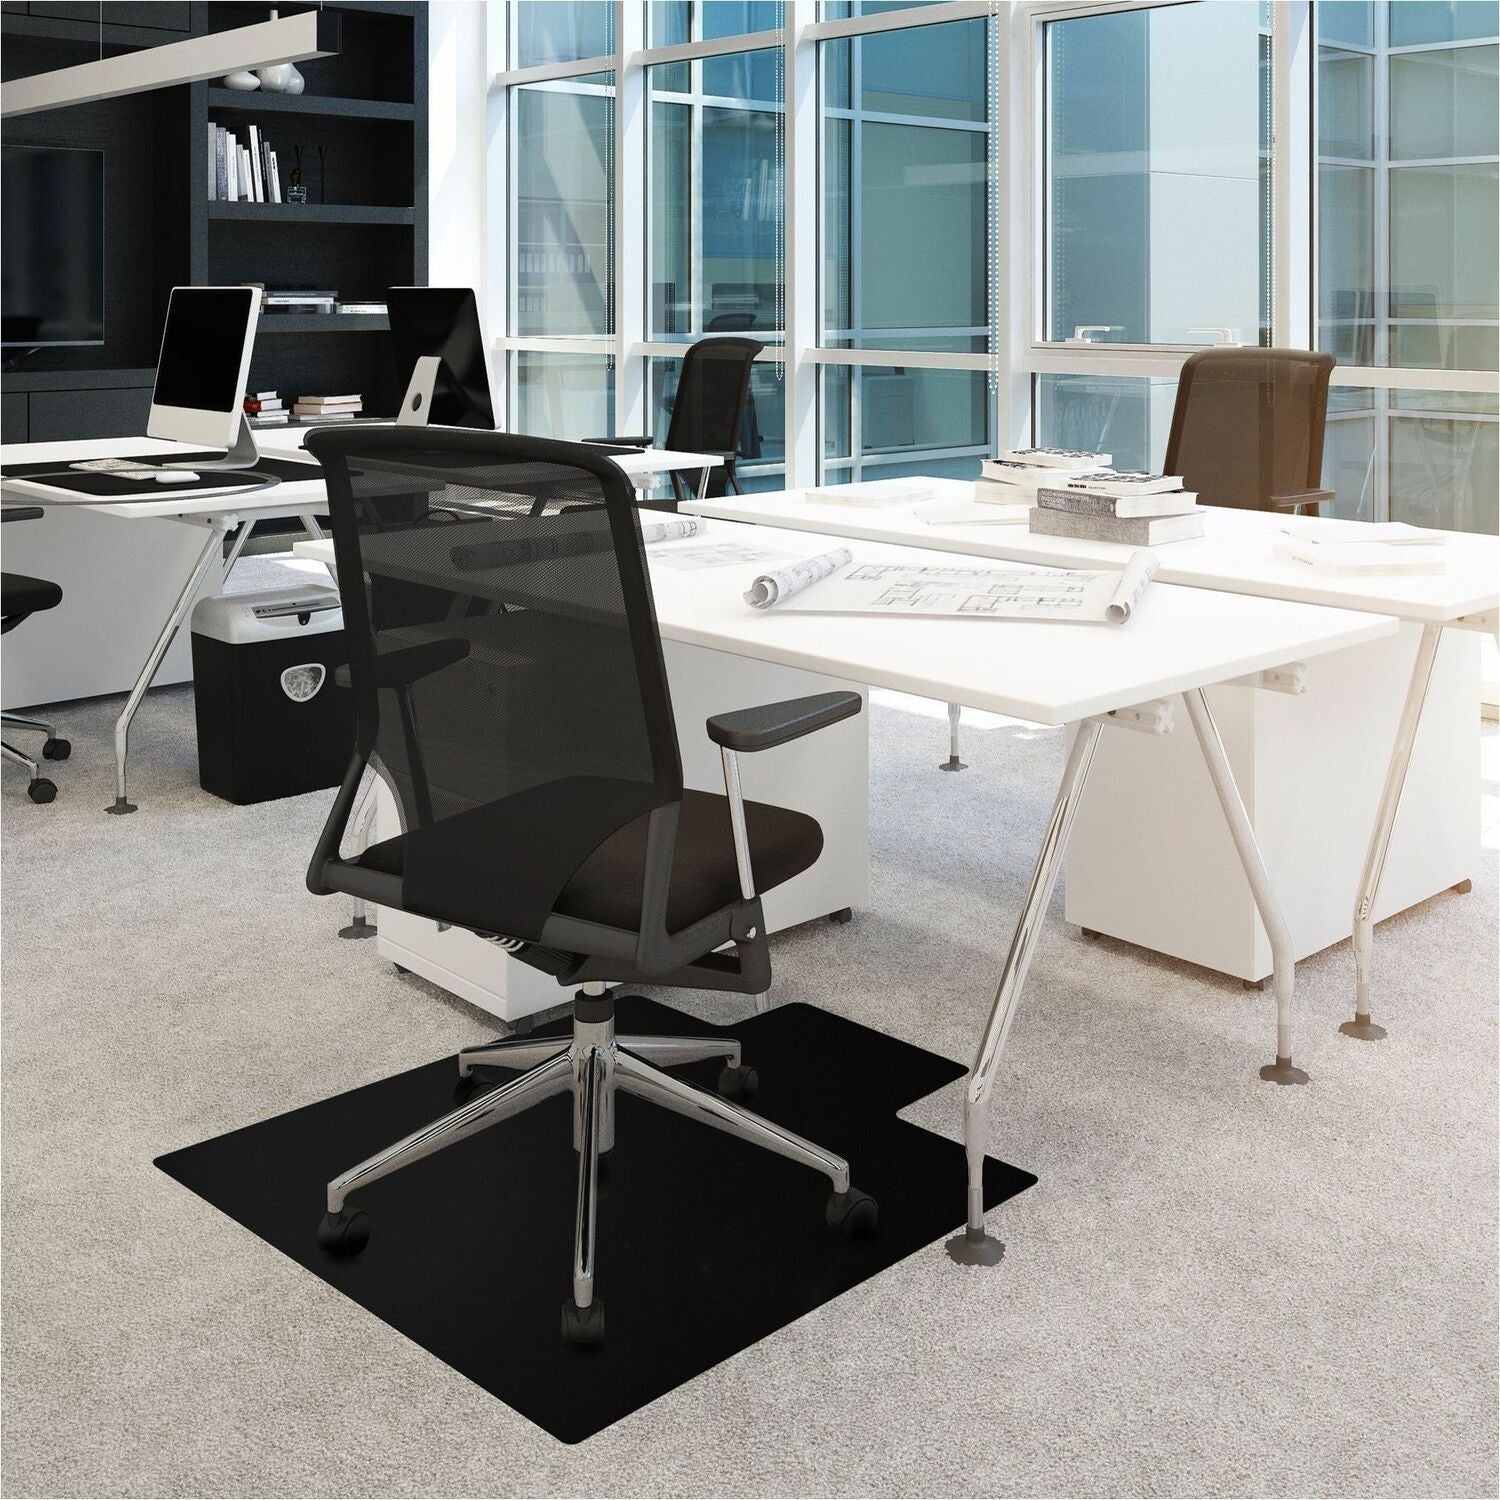 advantagemat-black-vinyl-lipped-chair-mat-for-carpets-36-x-48-48-length-x-36-width-x-0090-depth-x-0090-thickness-lip-size-20-length-x-10-width-lipped-classic-vinyl-polyvinyl-chloride-pvc-black-1each-taa-compliant_flrfc113648llbv - 1